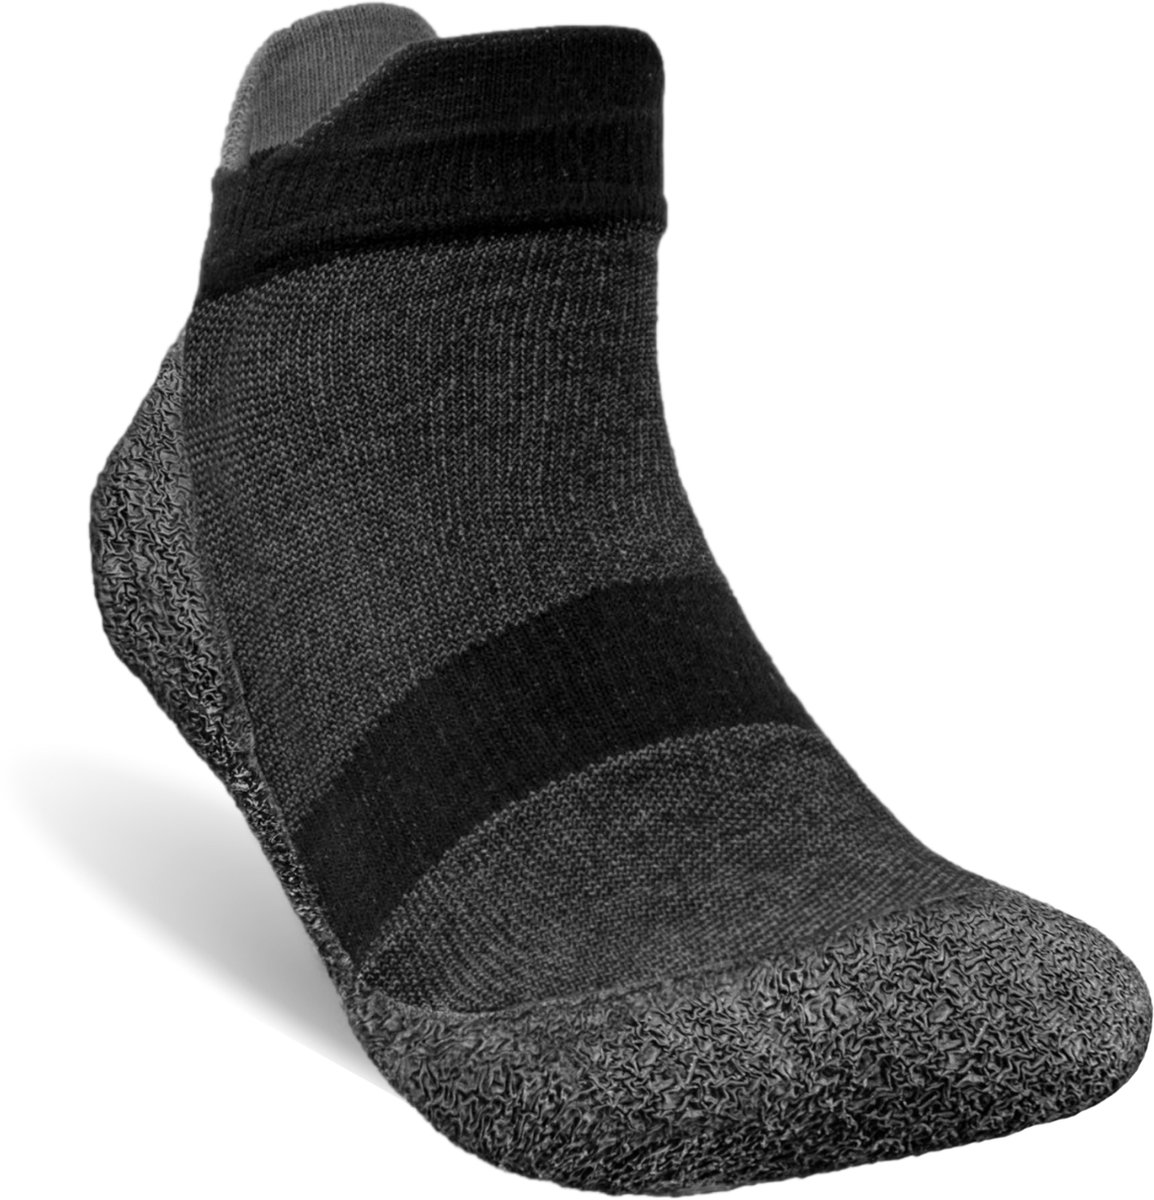 Baresocks 2.0 - Barefoot sokschoen maat 5XL